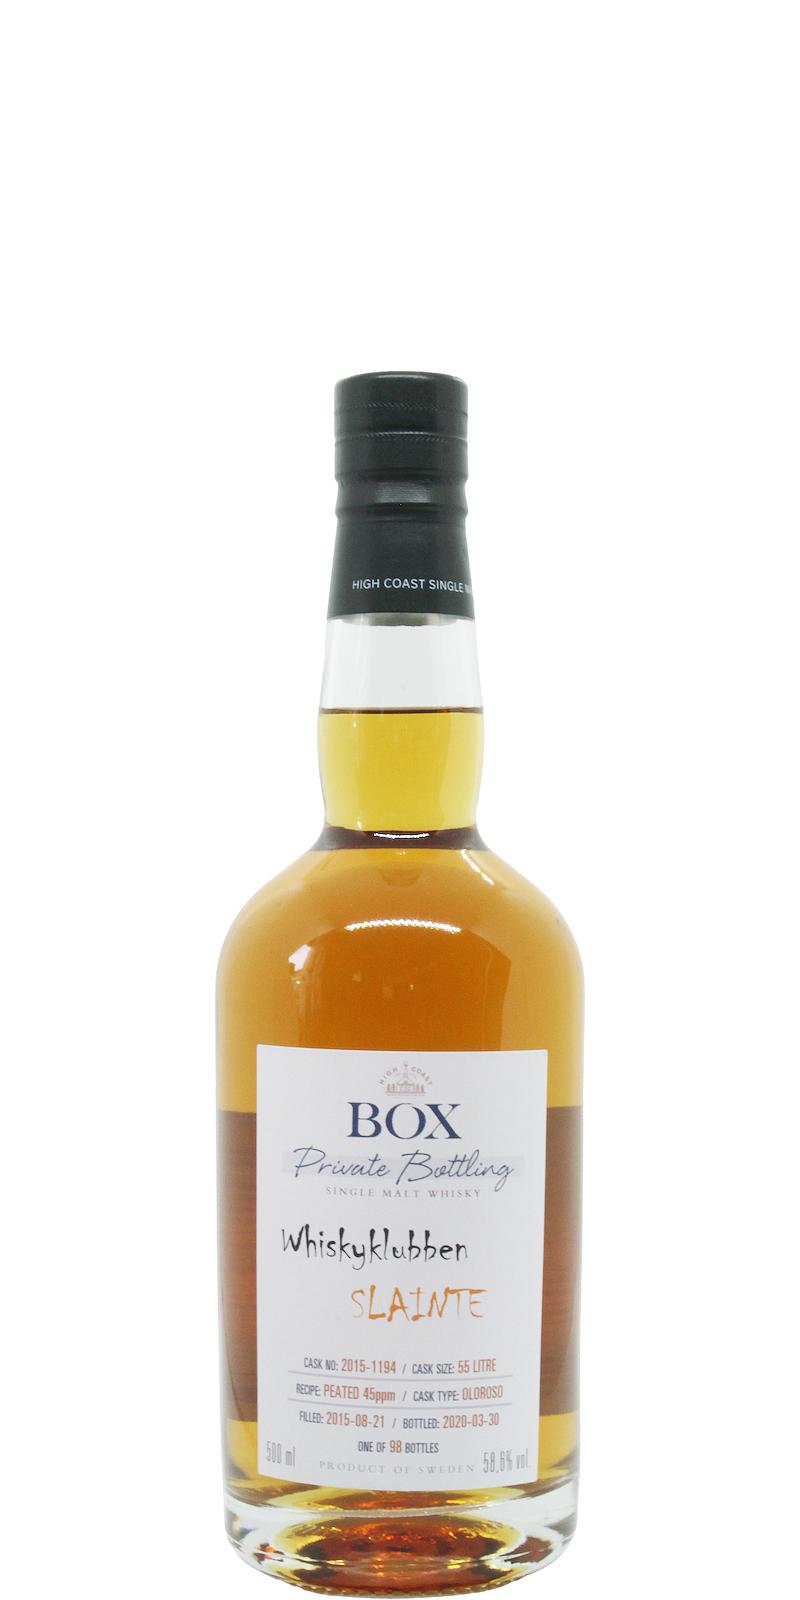 Box 2015 WSla Whiskyklubben Slainte Oloroso 2015 1194 58.6% 500ml